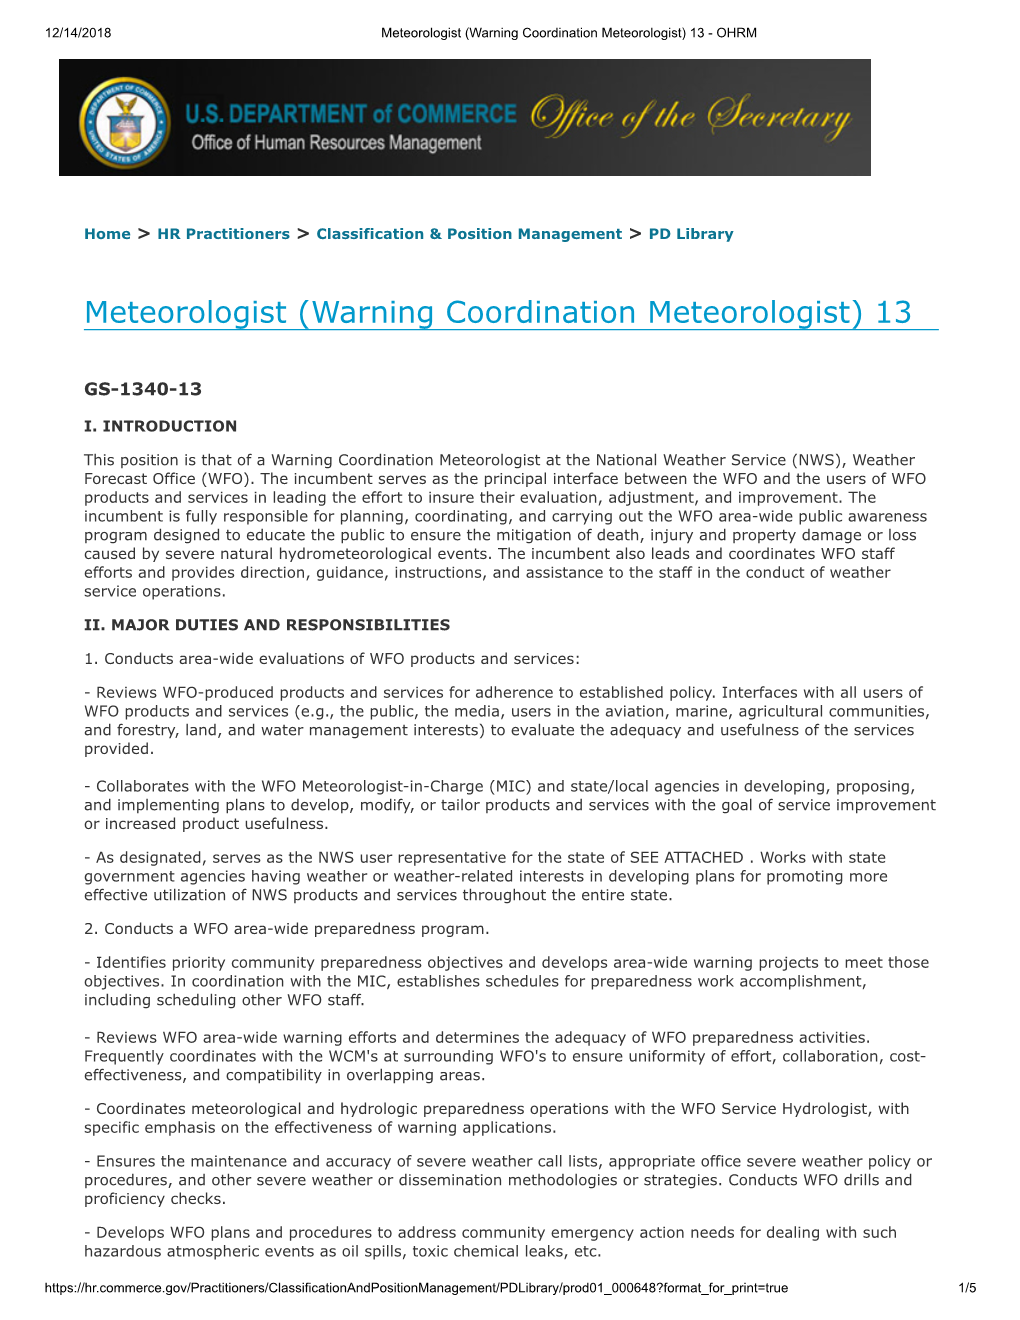 Warning Coordination Meteorologist) 13 - OHRM